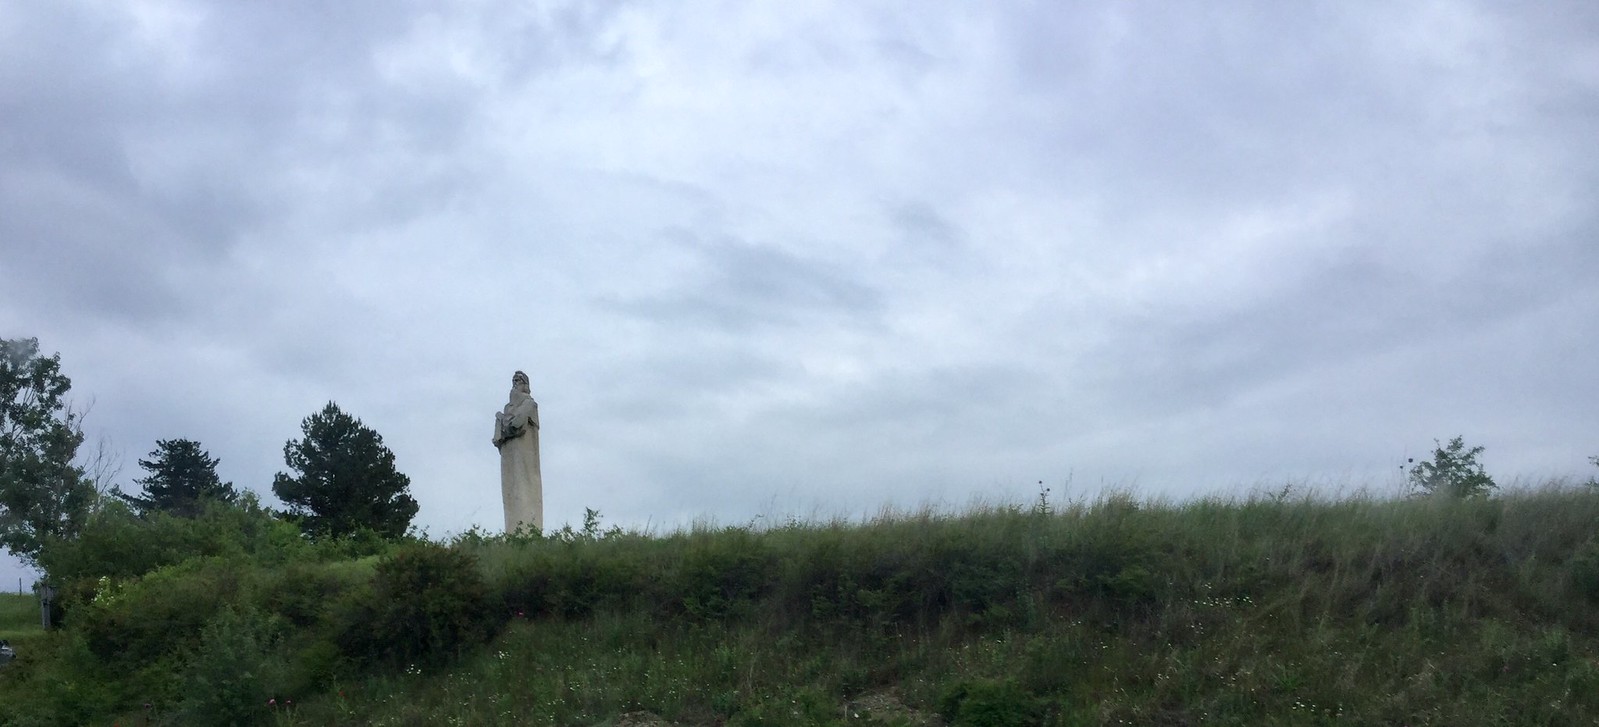 201705 - Balkans - Roadside Statue - 12 of 32 - Rila Monastery - Rilski manastir, May 26, 2017